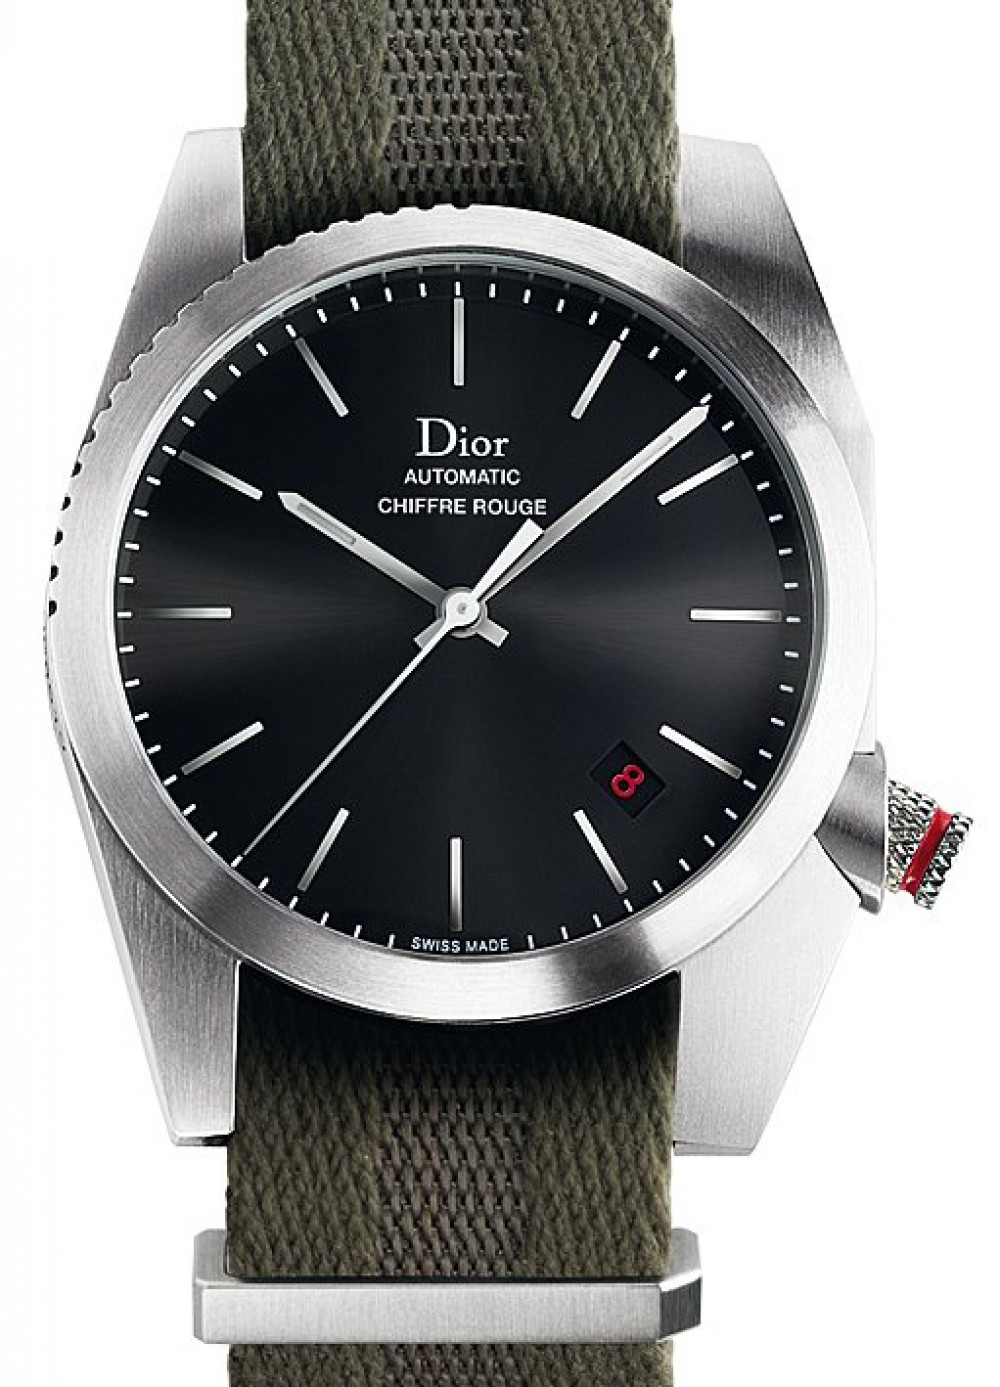 Zegarek firmy Dior, model Chiffre Rouge A03 on Khaki NATO